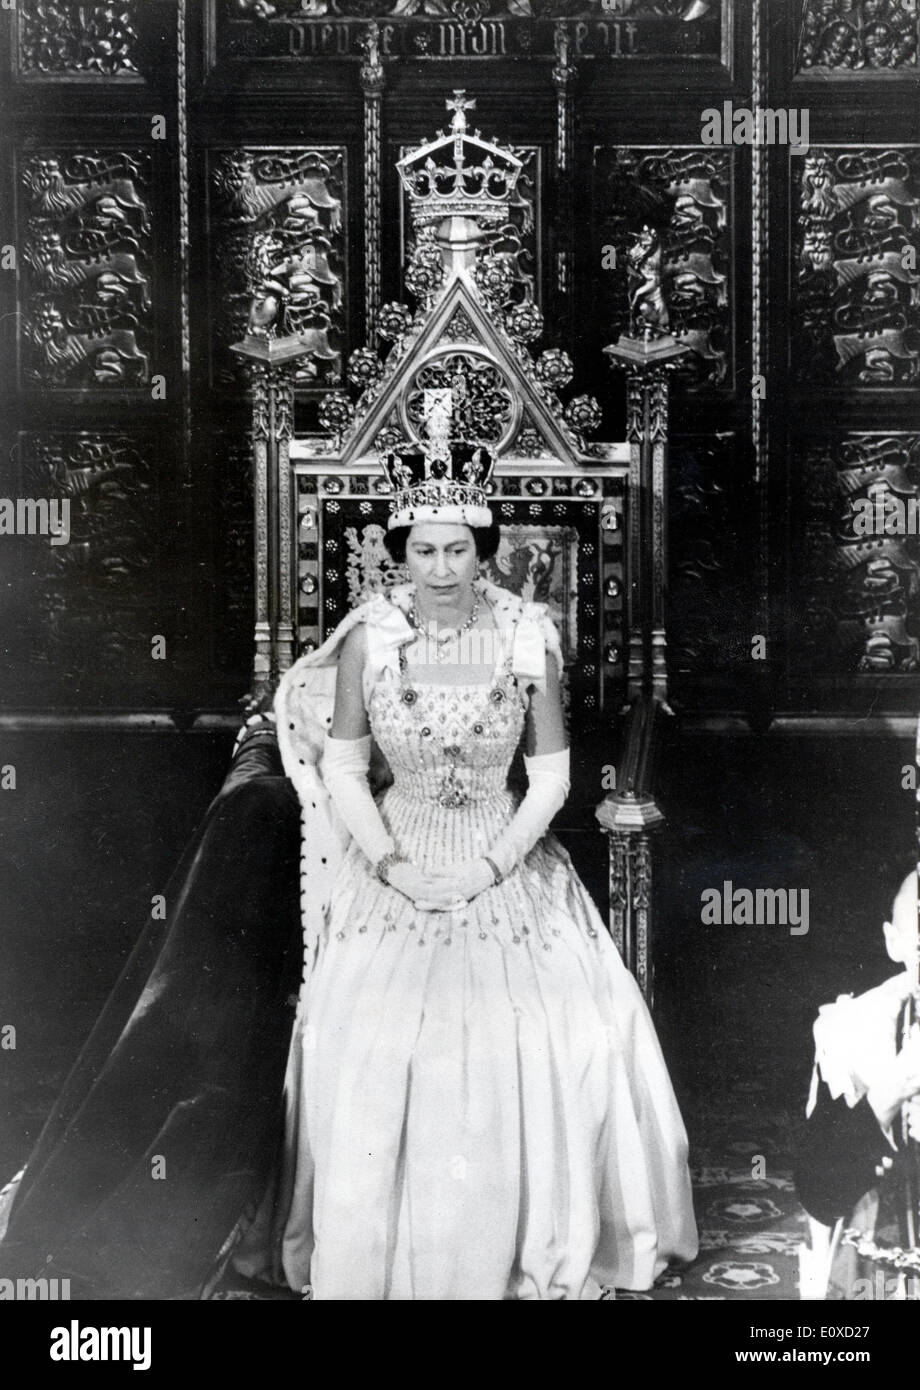 Queen Elizabeth II leads parliament Stock Photo